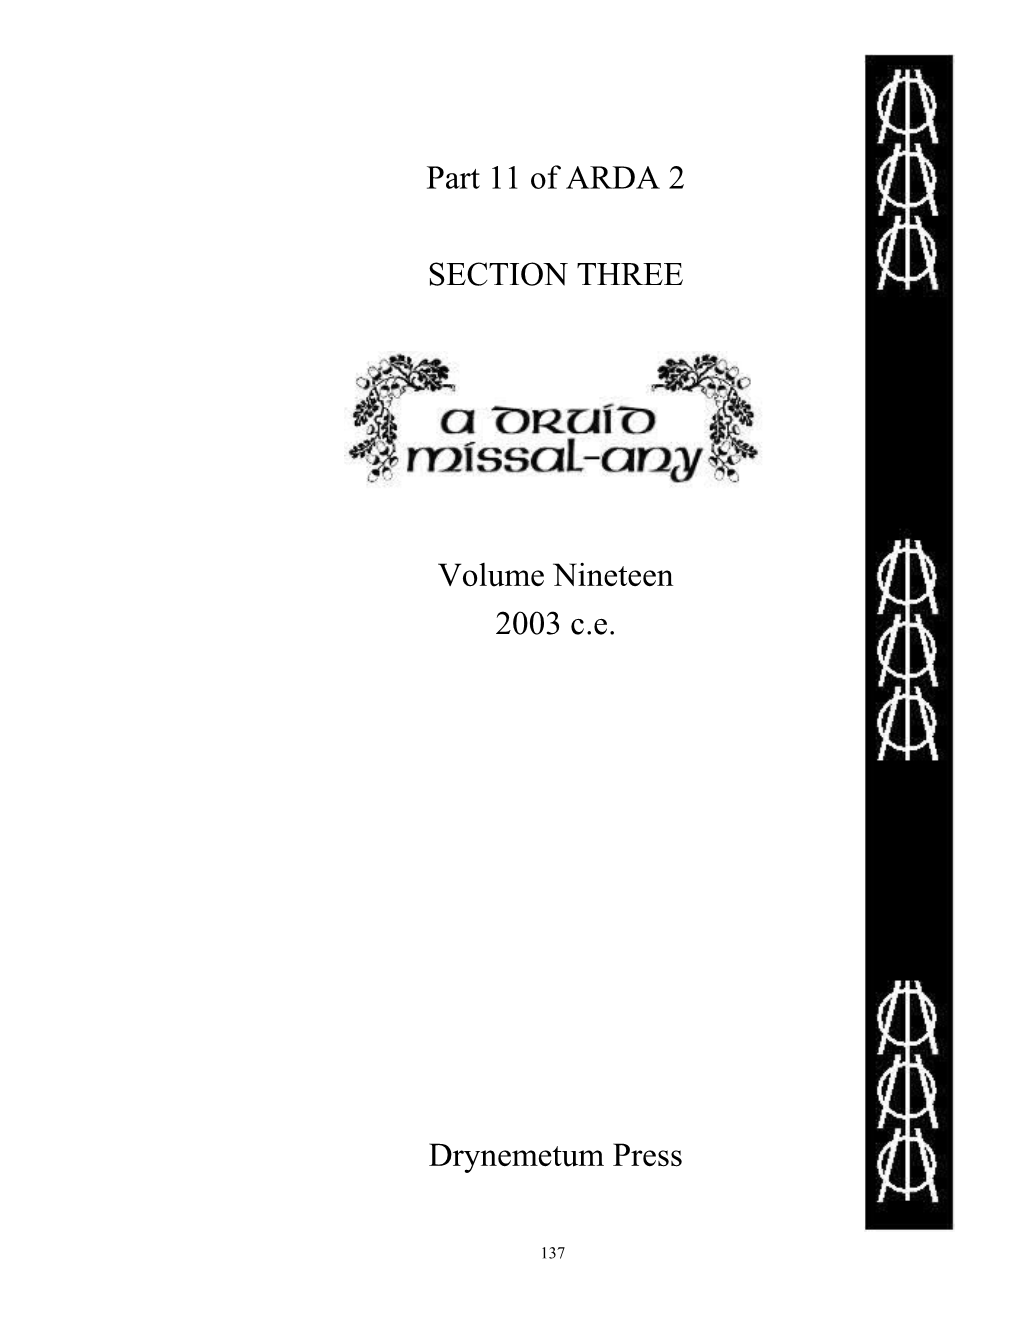 A Druid Missal-Any